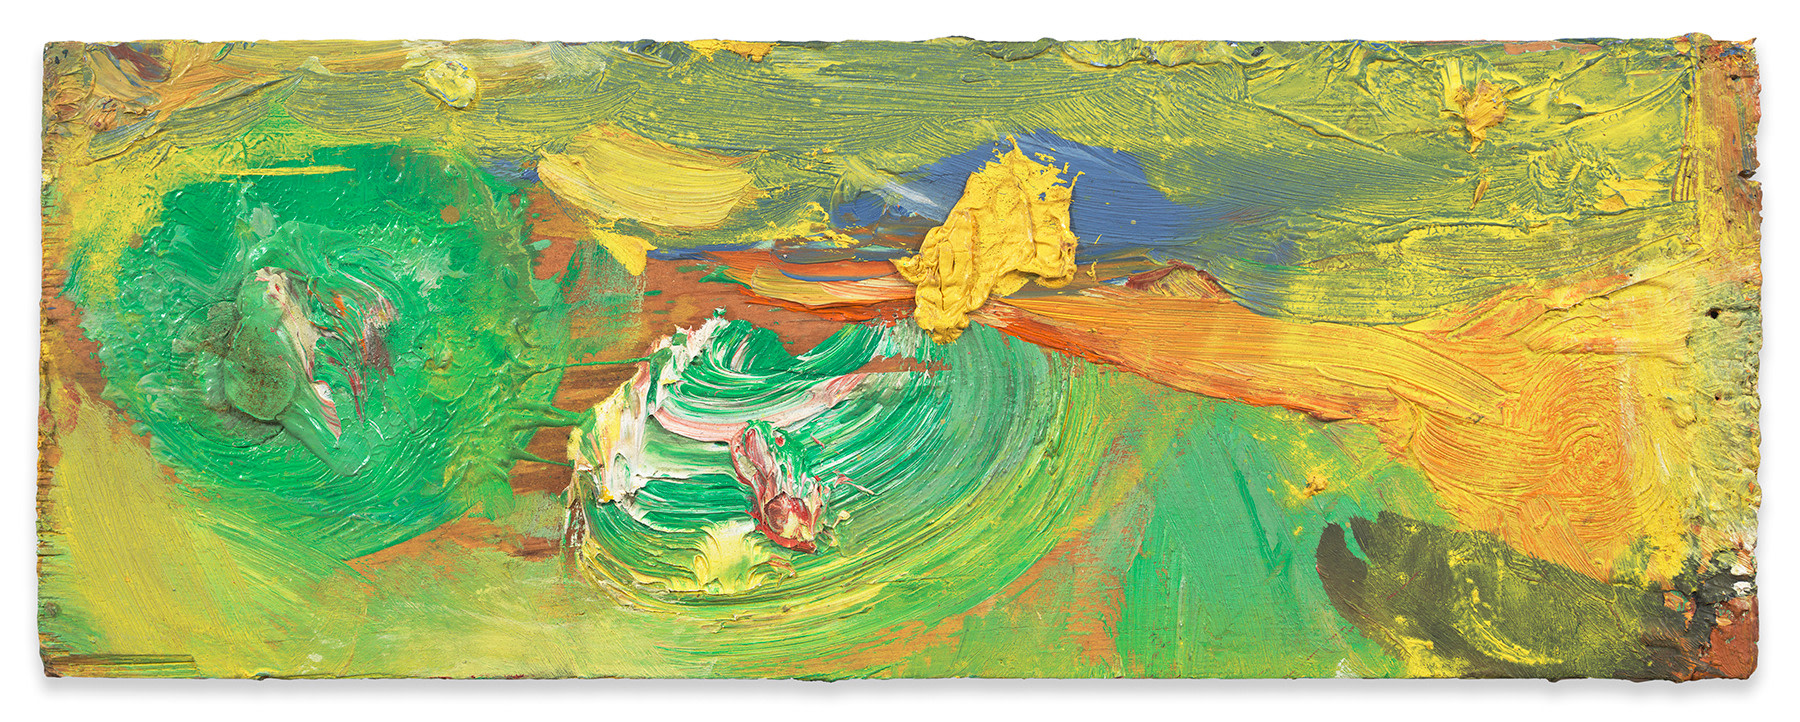 Hans Hofmann

Untitled, 1960-1965 (c)

Oil on panel

4 3/4h x 12 1/2w in

&amp;nbsp;